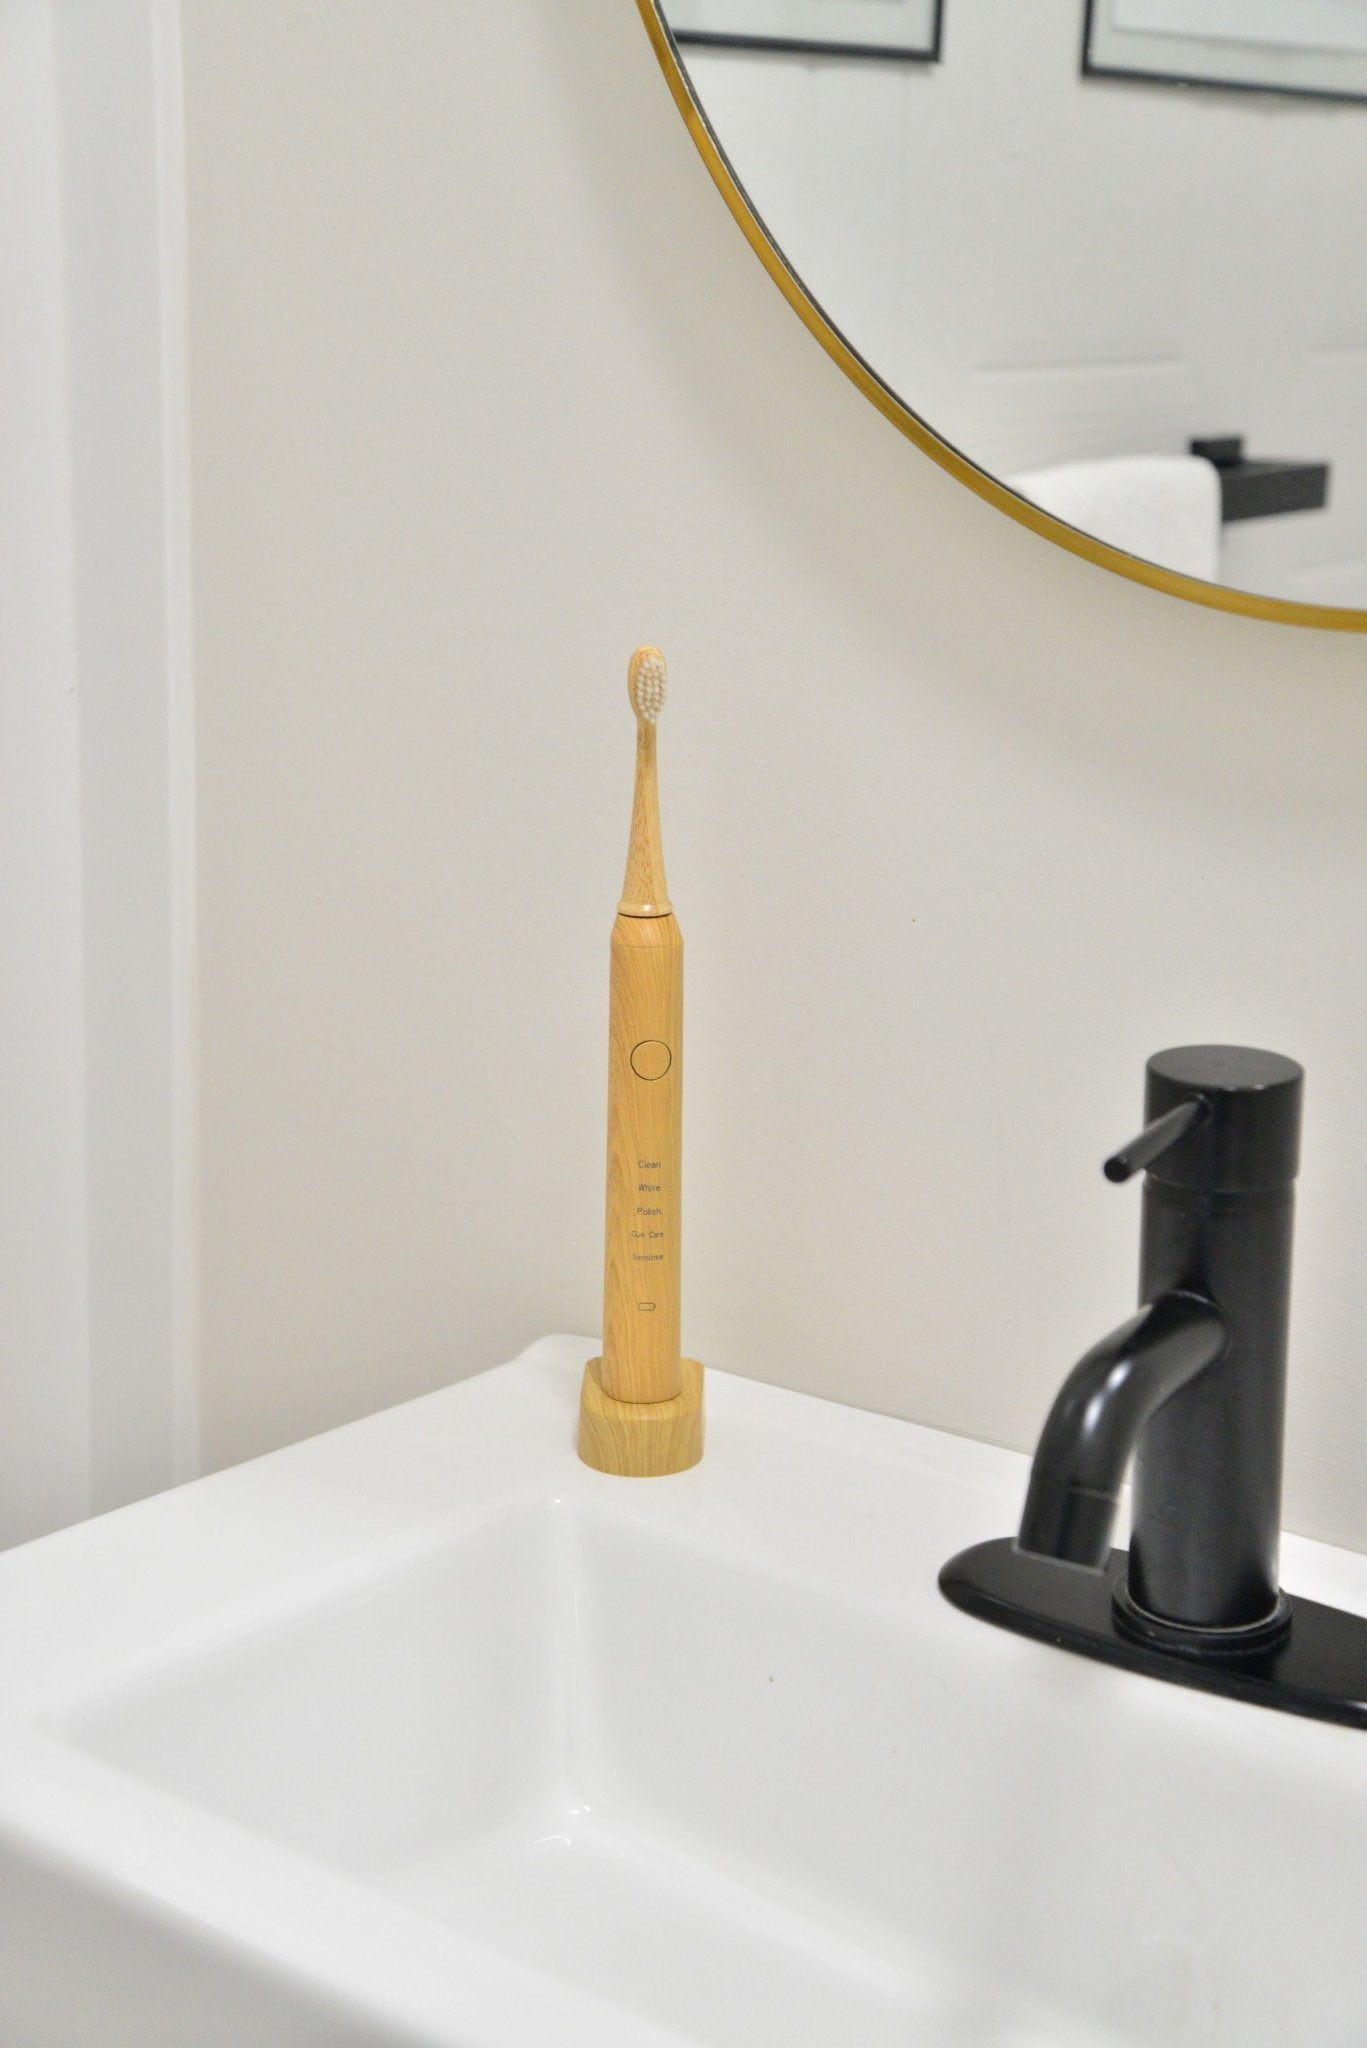 Bamboo electric toothbrush displayed in modern bathroom